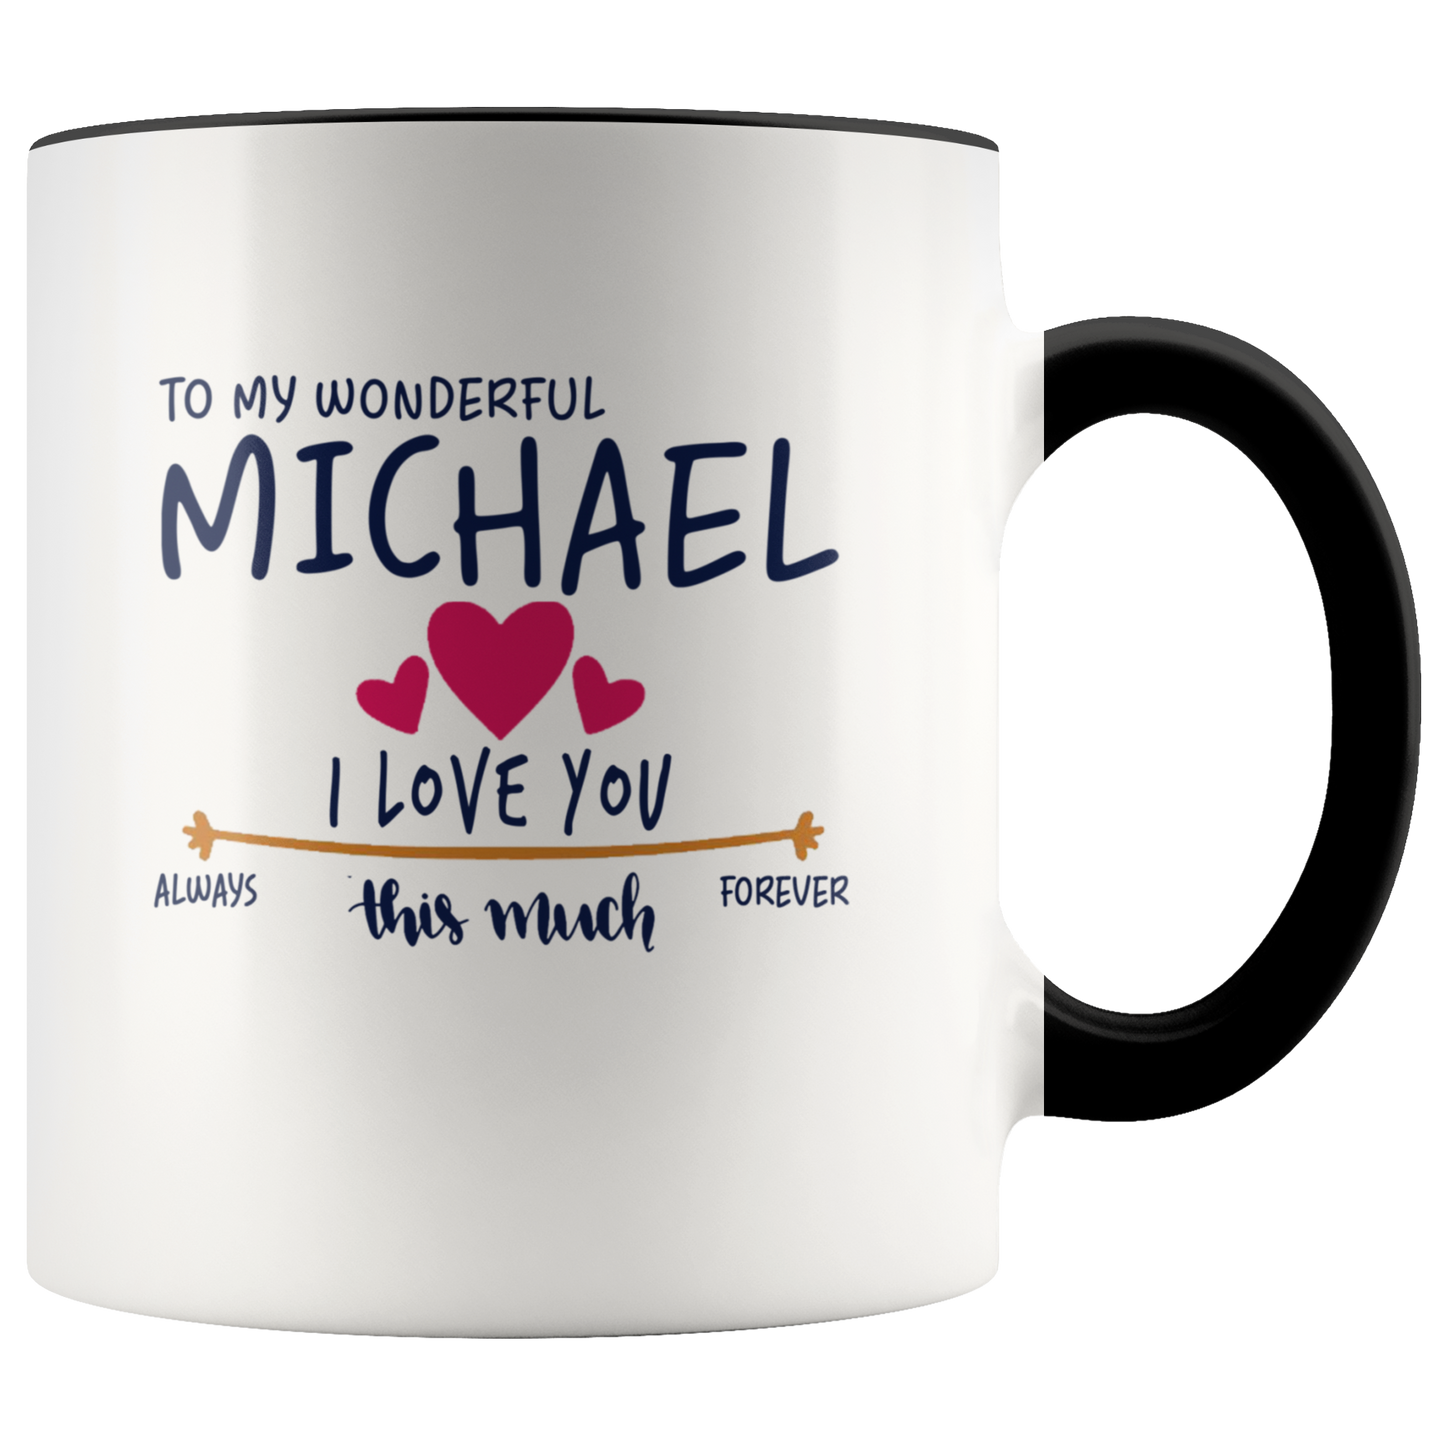 M-21259685-sp-23195 - Valentines Day Coffee Mug With Name Michael - To My Wonderfu